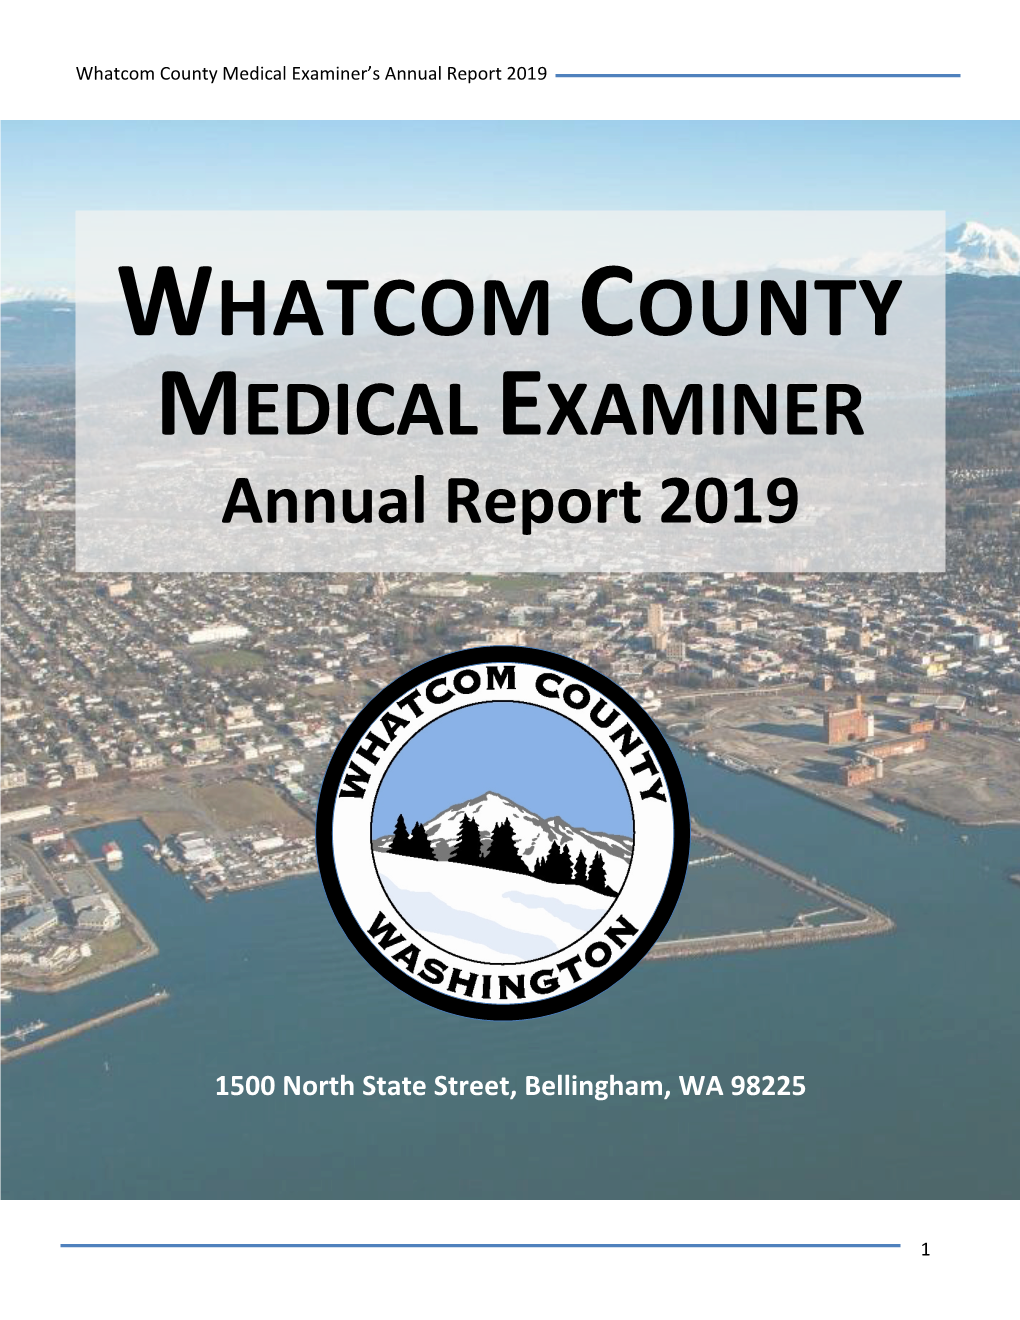 2019 Medical Examiner Annual Report